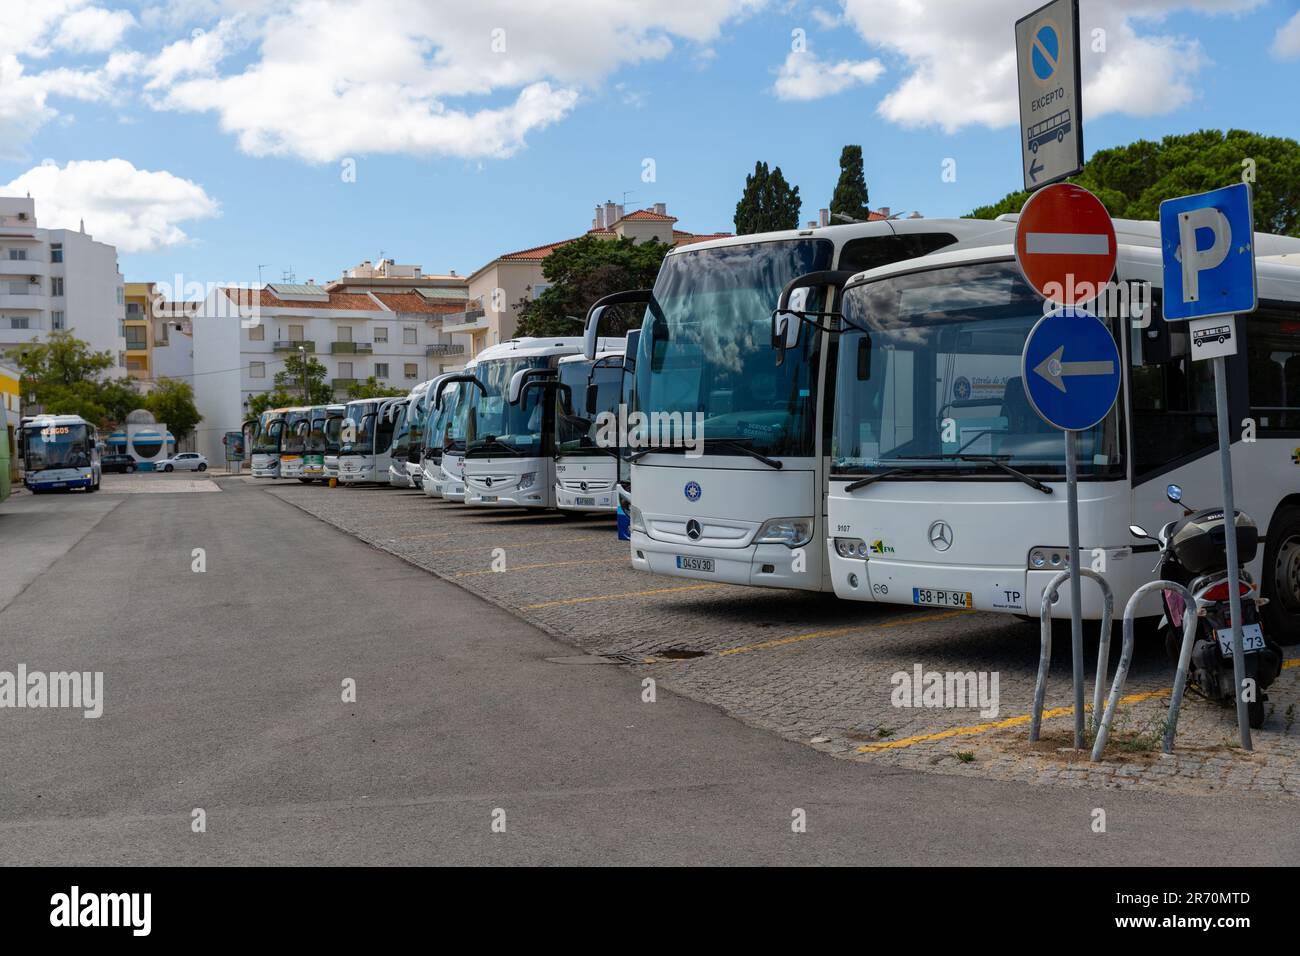 Rodoviario bus station Lagos, Portugal Stock Photo